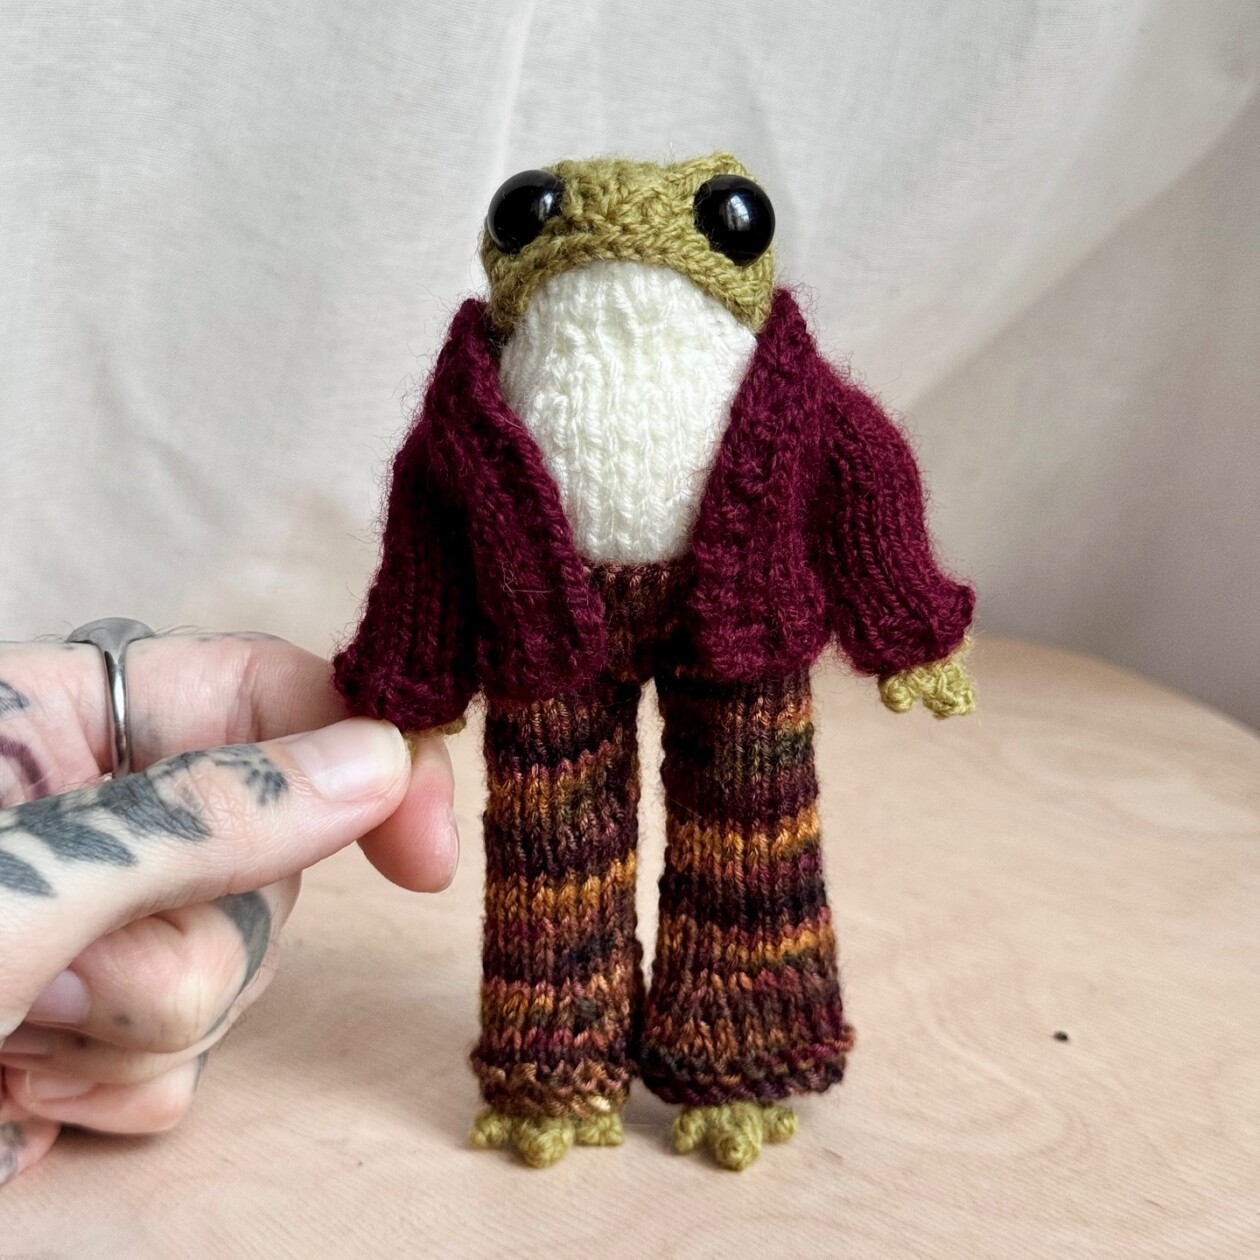 Enchanting Anthropomorphized Frog Crochet Patterns By Elliot (20)